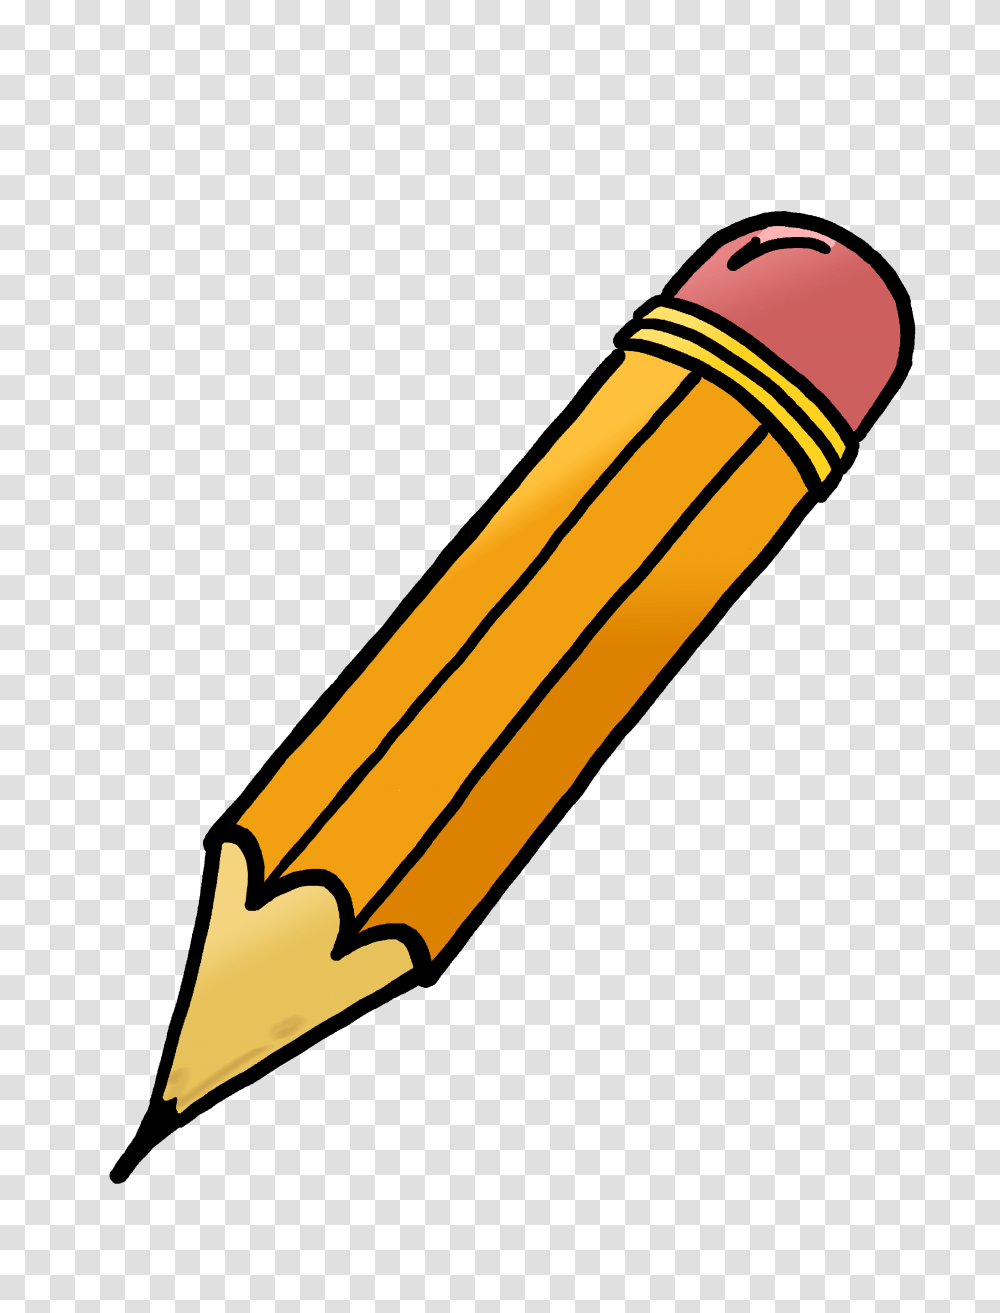 Pencil Images Free Google Search Pencil Clipart Clip Pencil Clipart Transparent Png